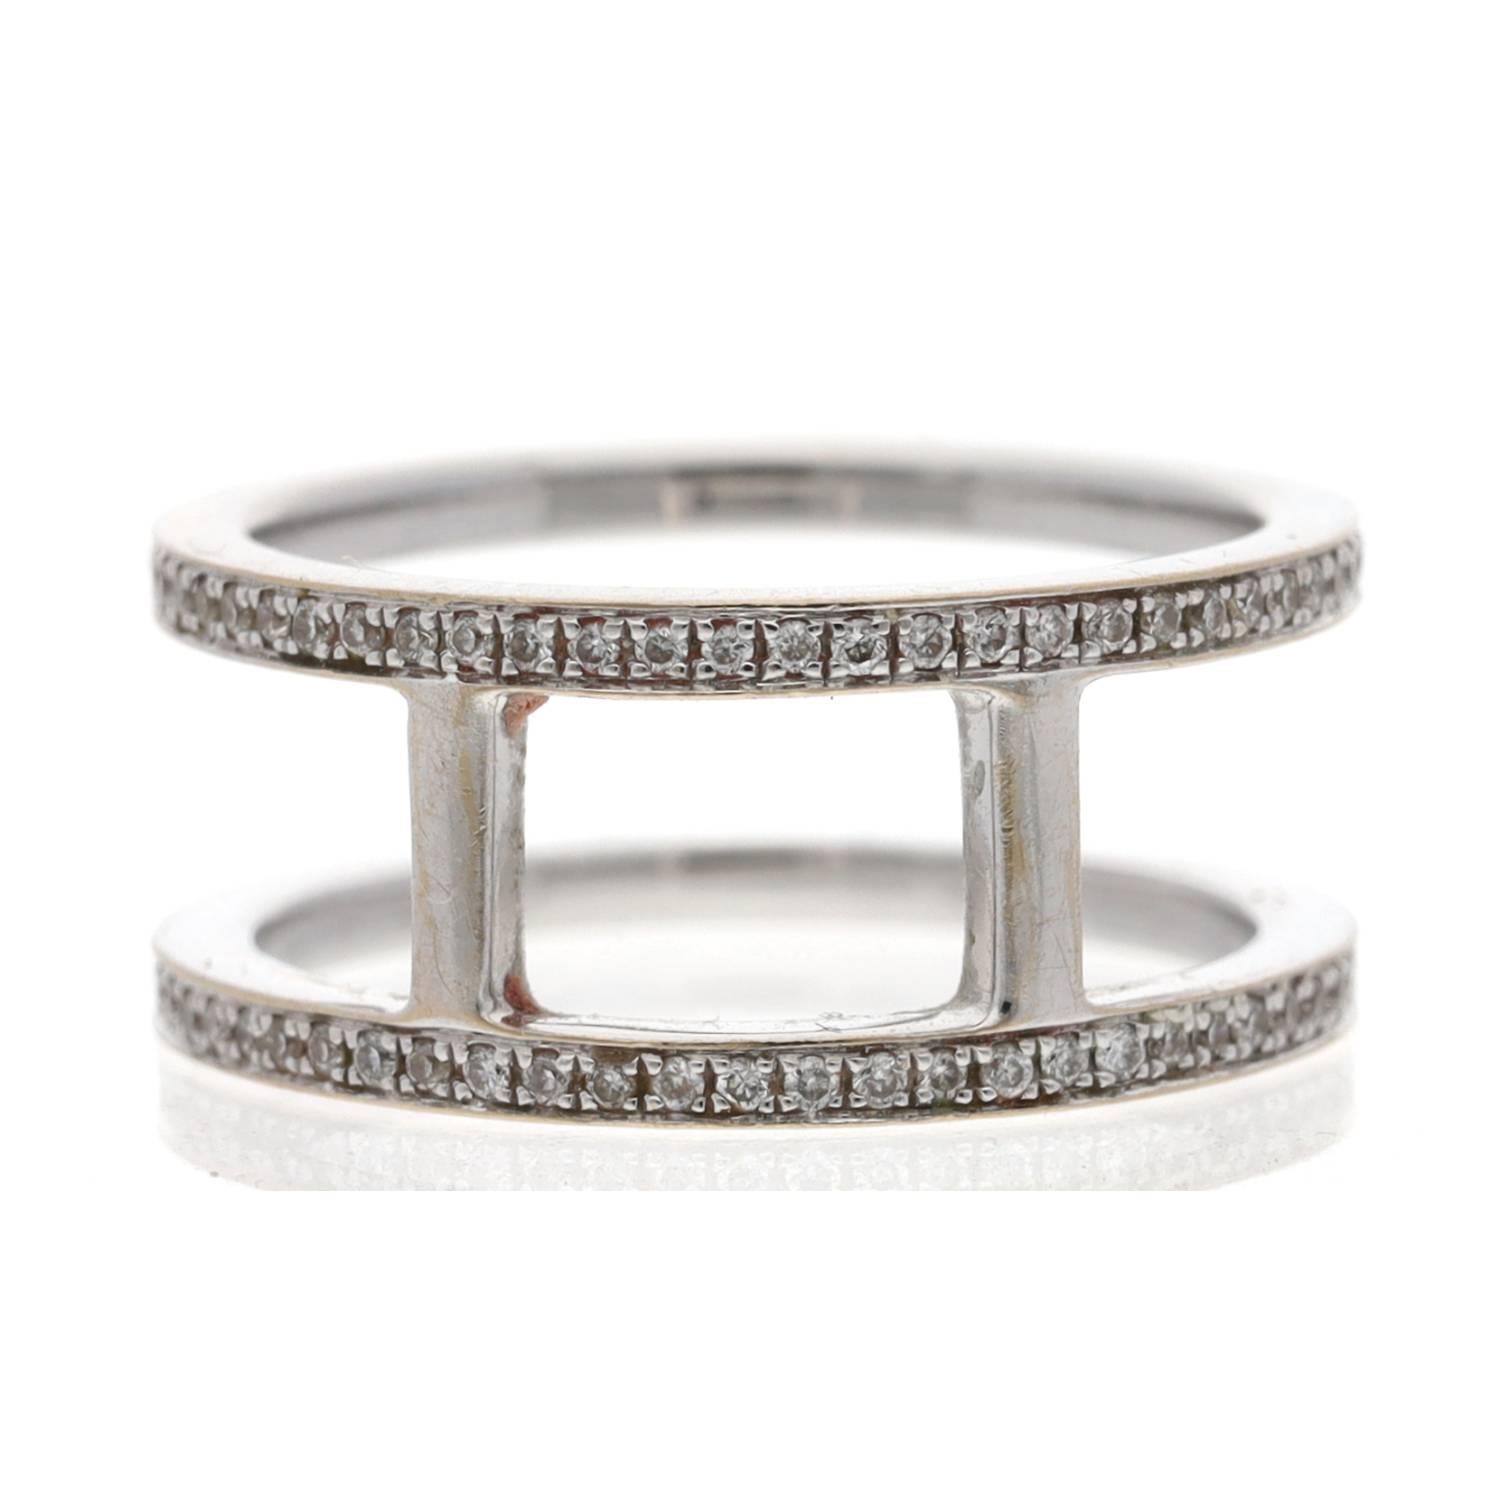 ANNA 18ct white gold diamond set metal toe ring, signed, width 7mm, 2.7gm (609)